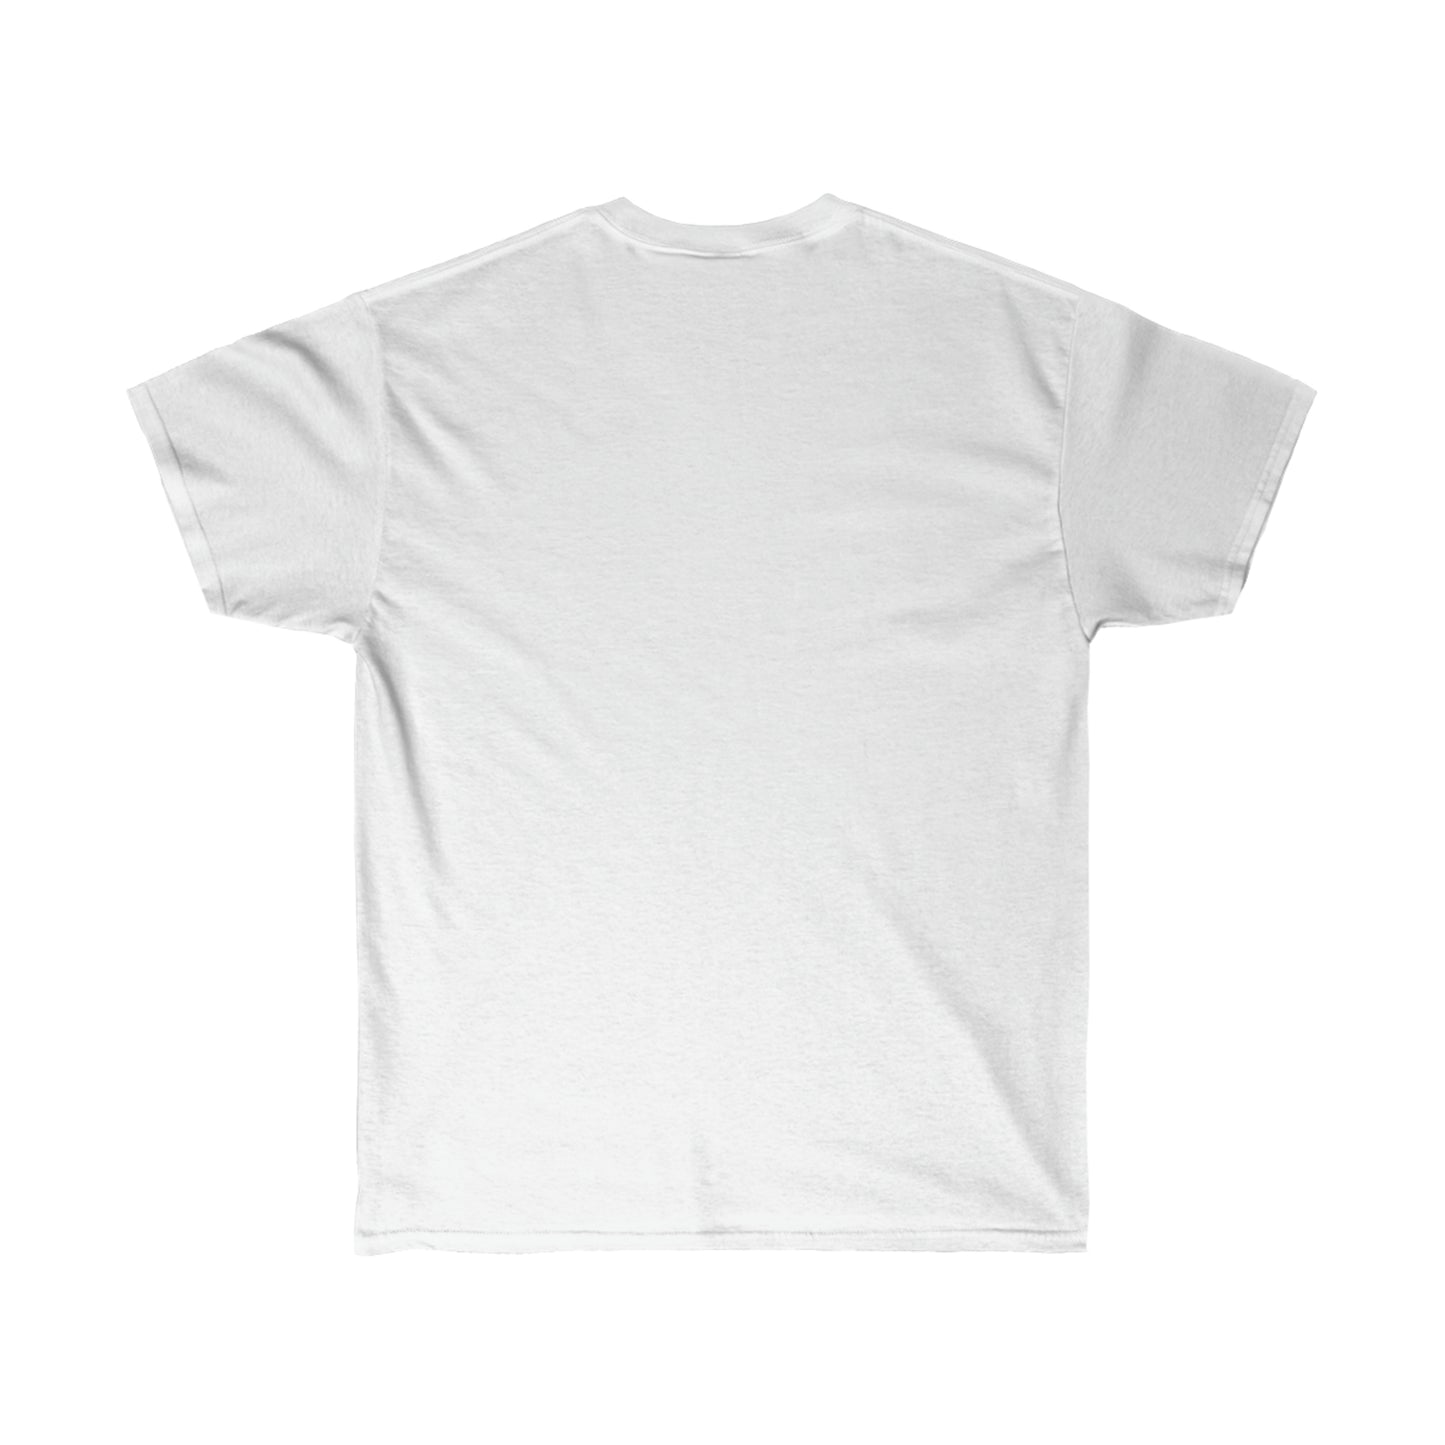 Seatown Blues - Unisex T-Shirt